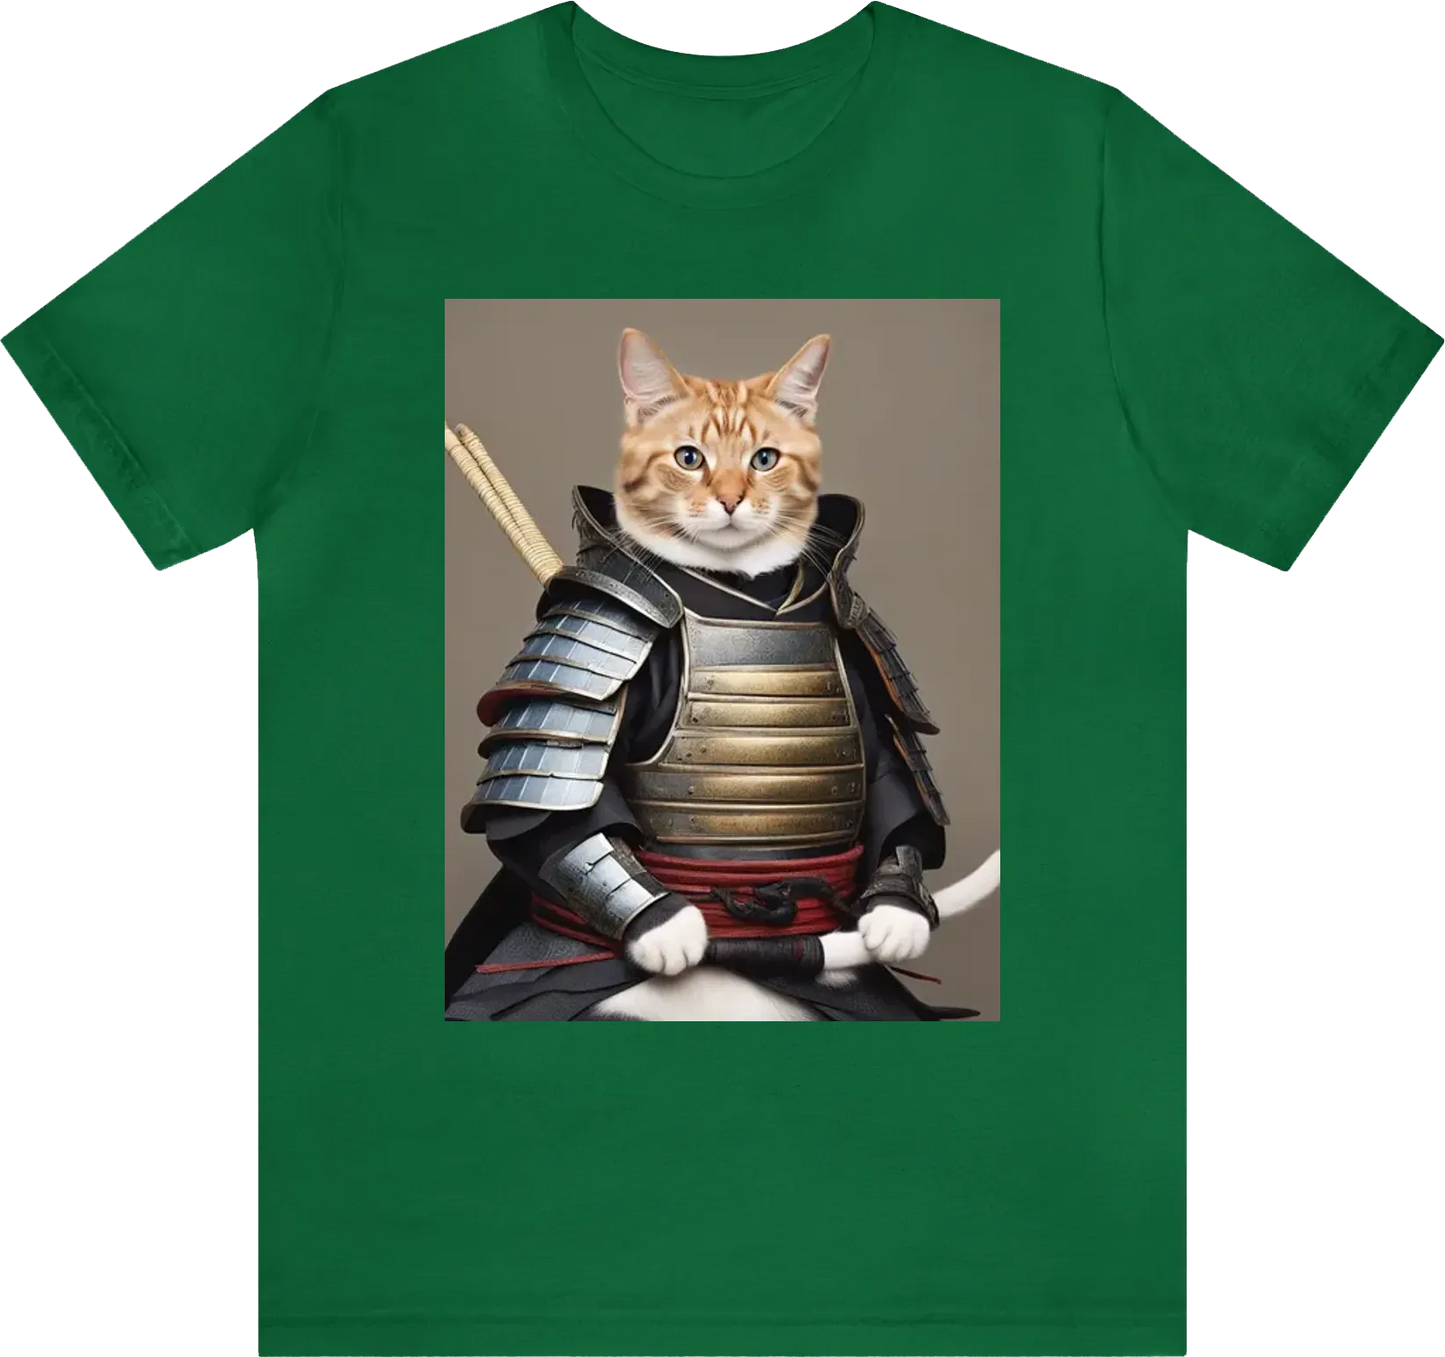 A cat wearing samurai armor